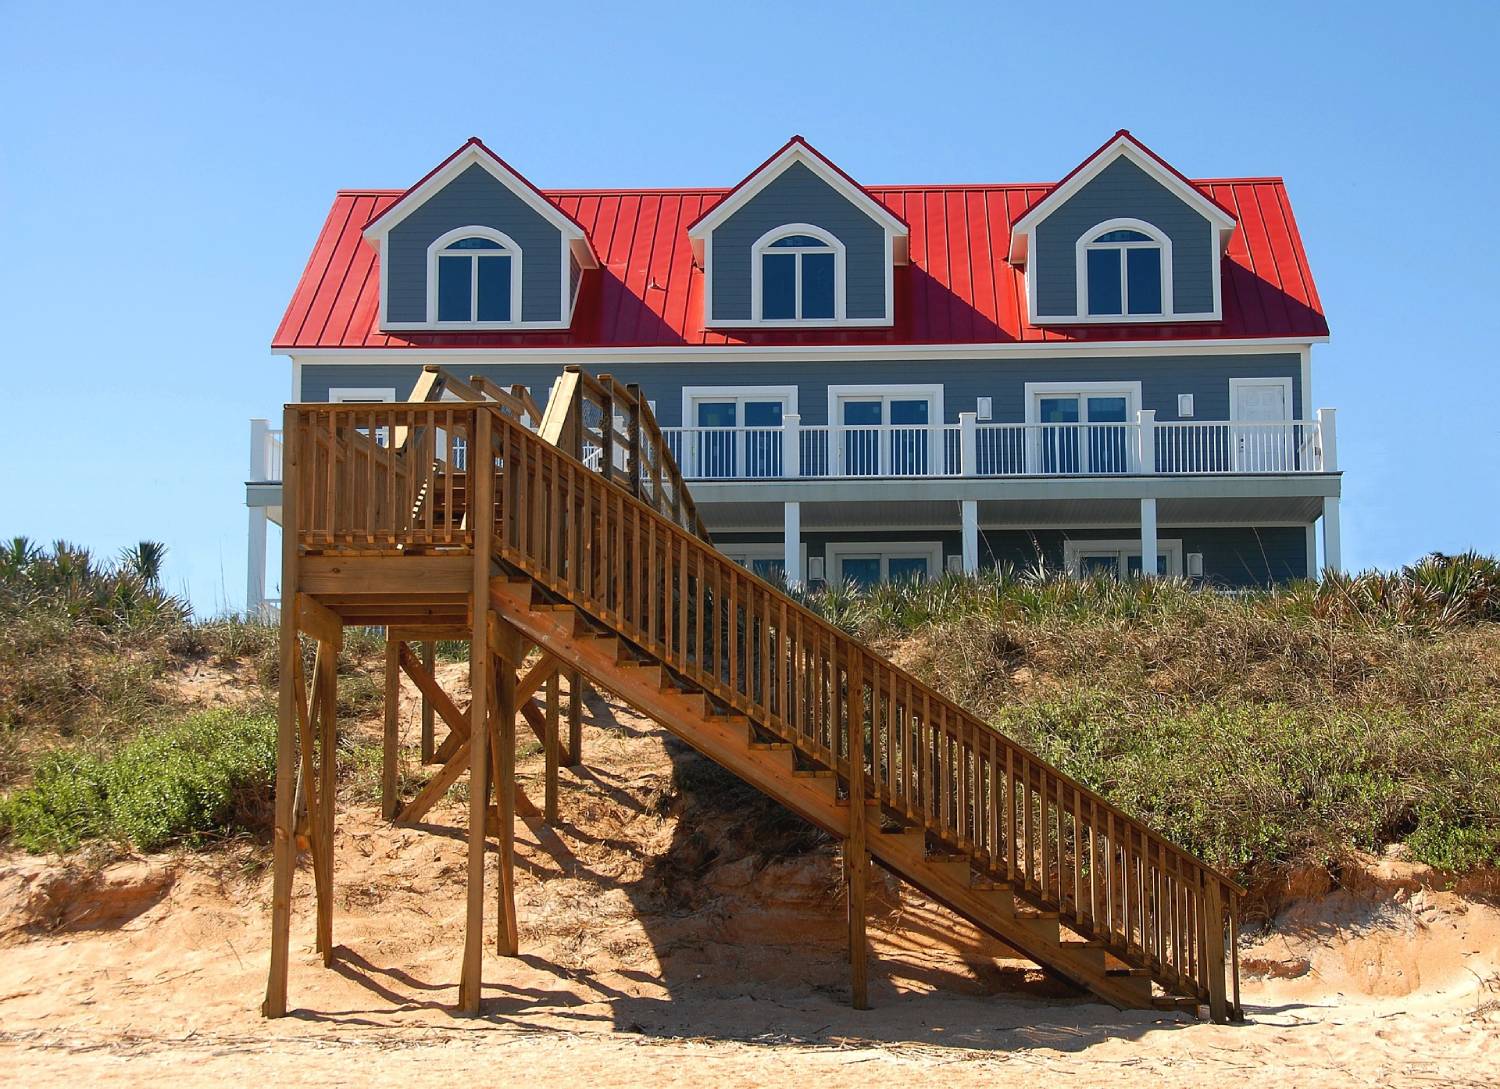 5 Real Estate Marketing Tips for Coastal Markets